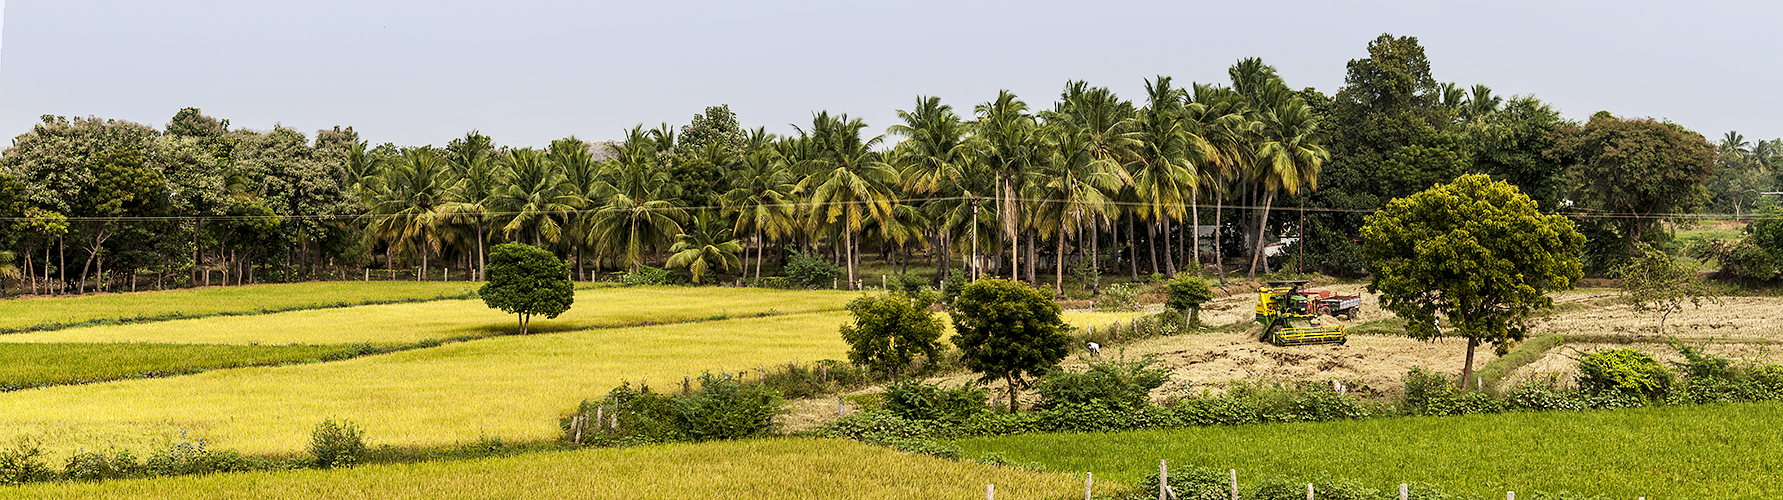 Harvesting and Ripening Fields-Madurai